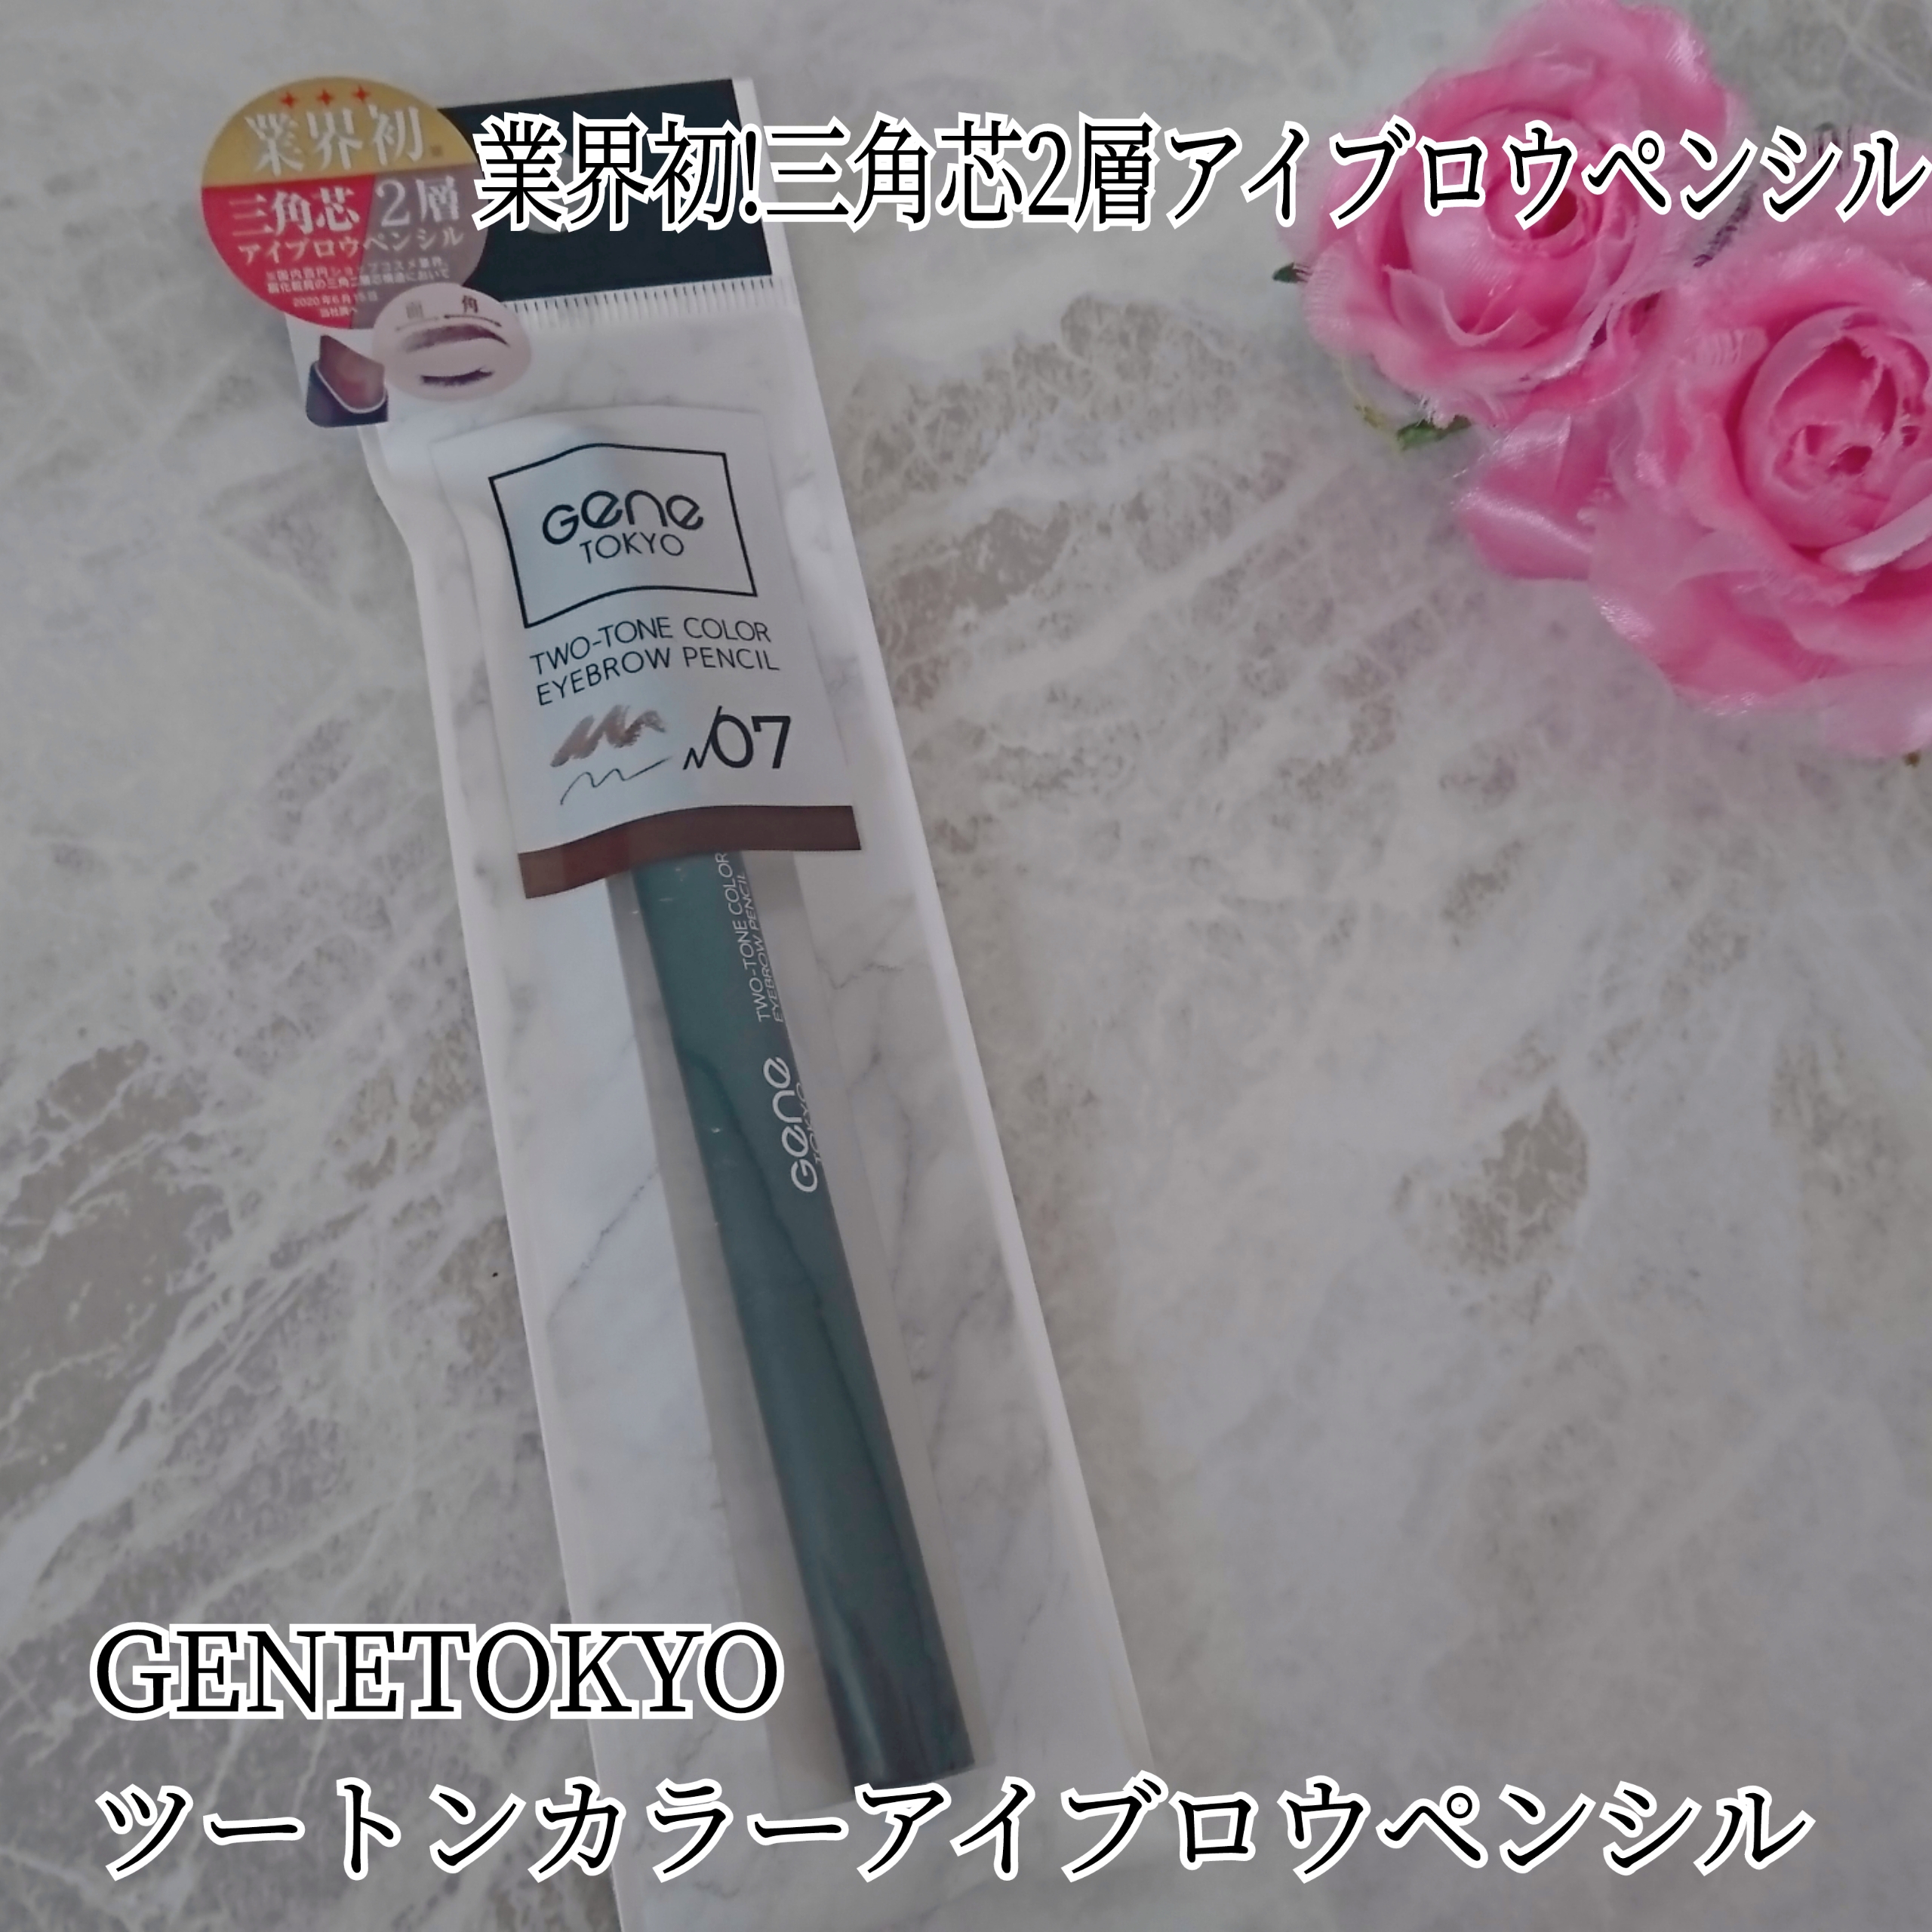 GENETOKYO ツートンカラーアイブロウペンシルを使ったYuKaRi♡さんのクチコミ画像1